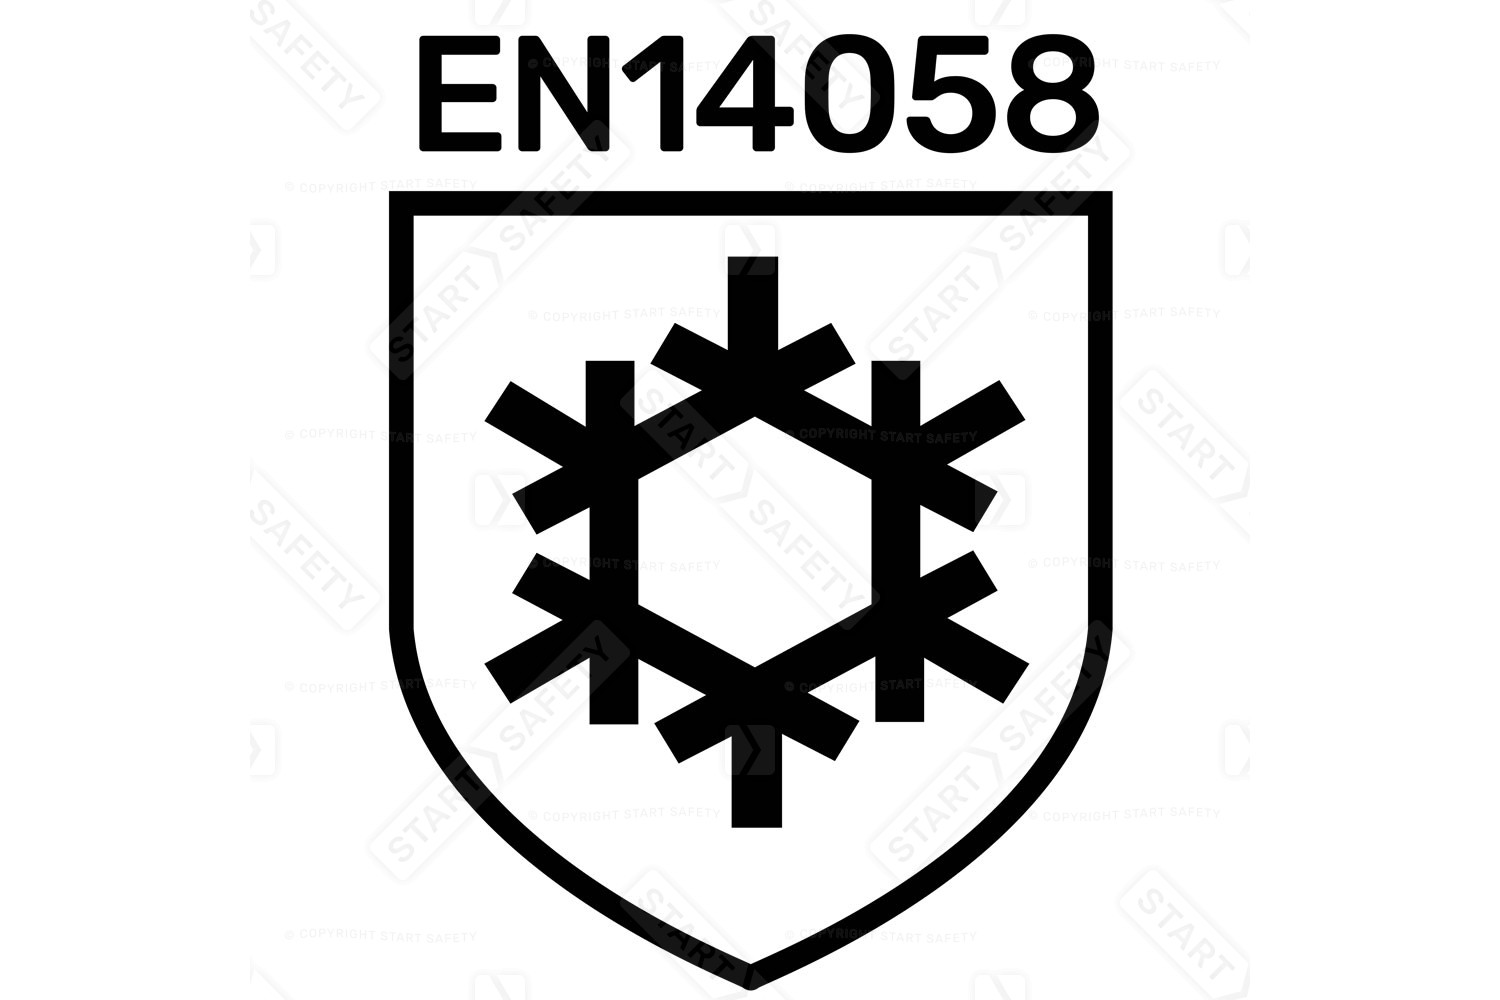 EN ISO 14058 Thermal Insulation Standard Symbol